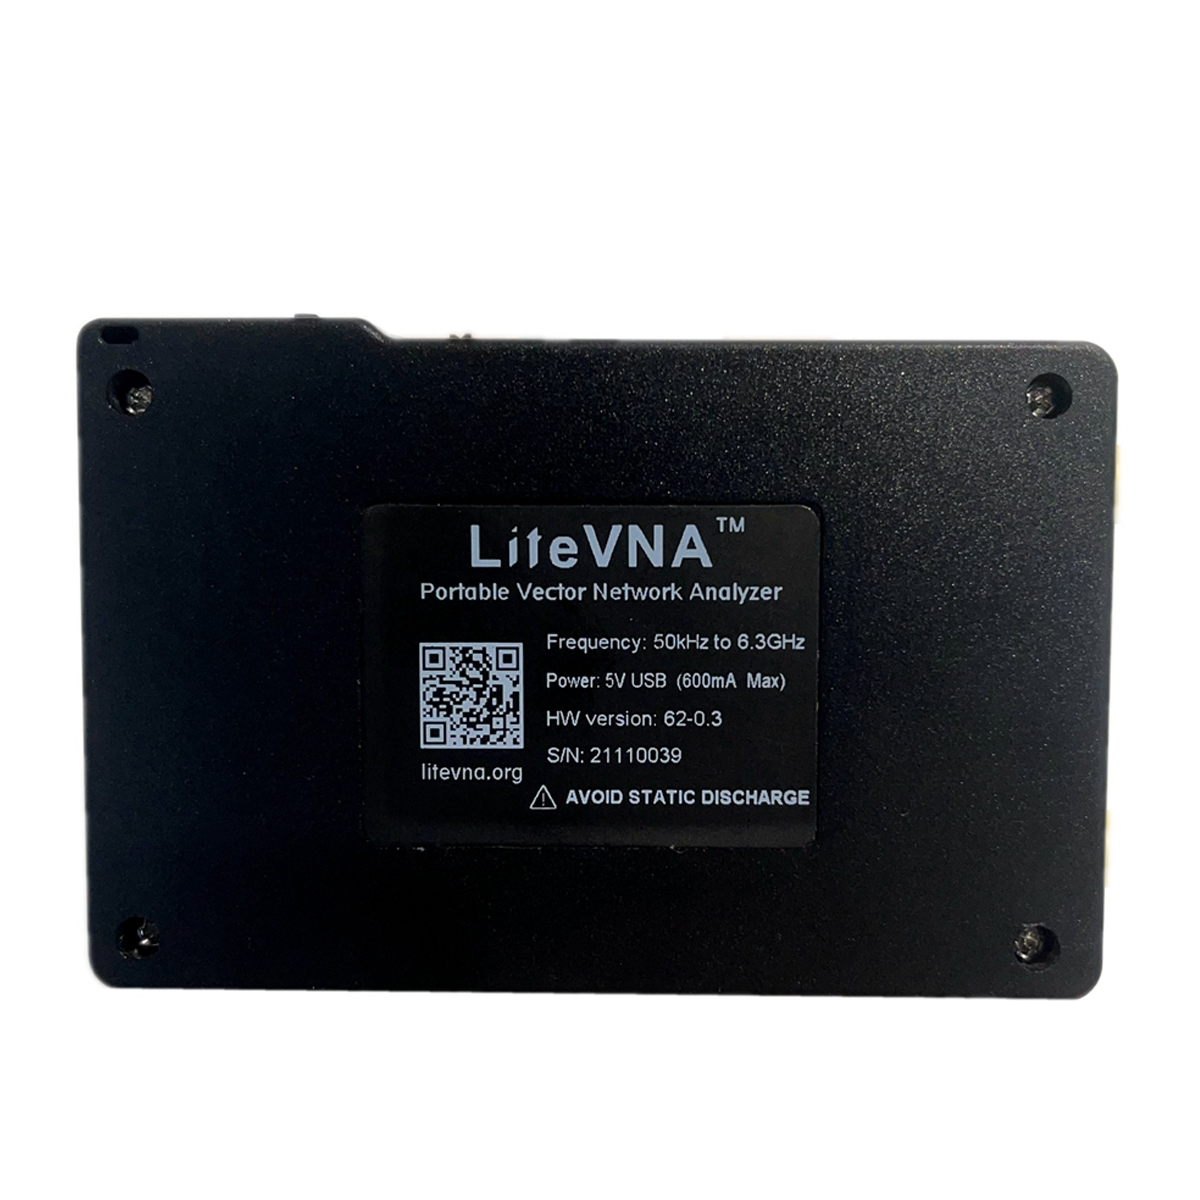 Find Original 50kHz 6 3GHz LiteVNA 2 8 Display Vector Network Analyzer HF VHF UHF Antenna for Sale on Gipsybee.com with cryptocurrencies